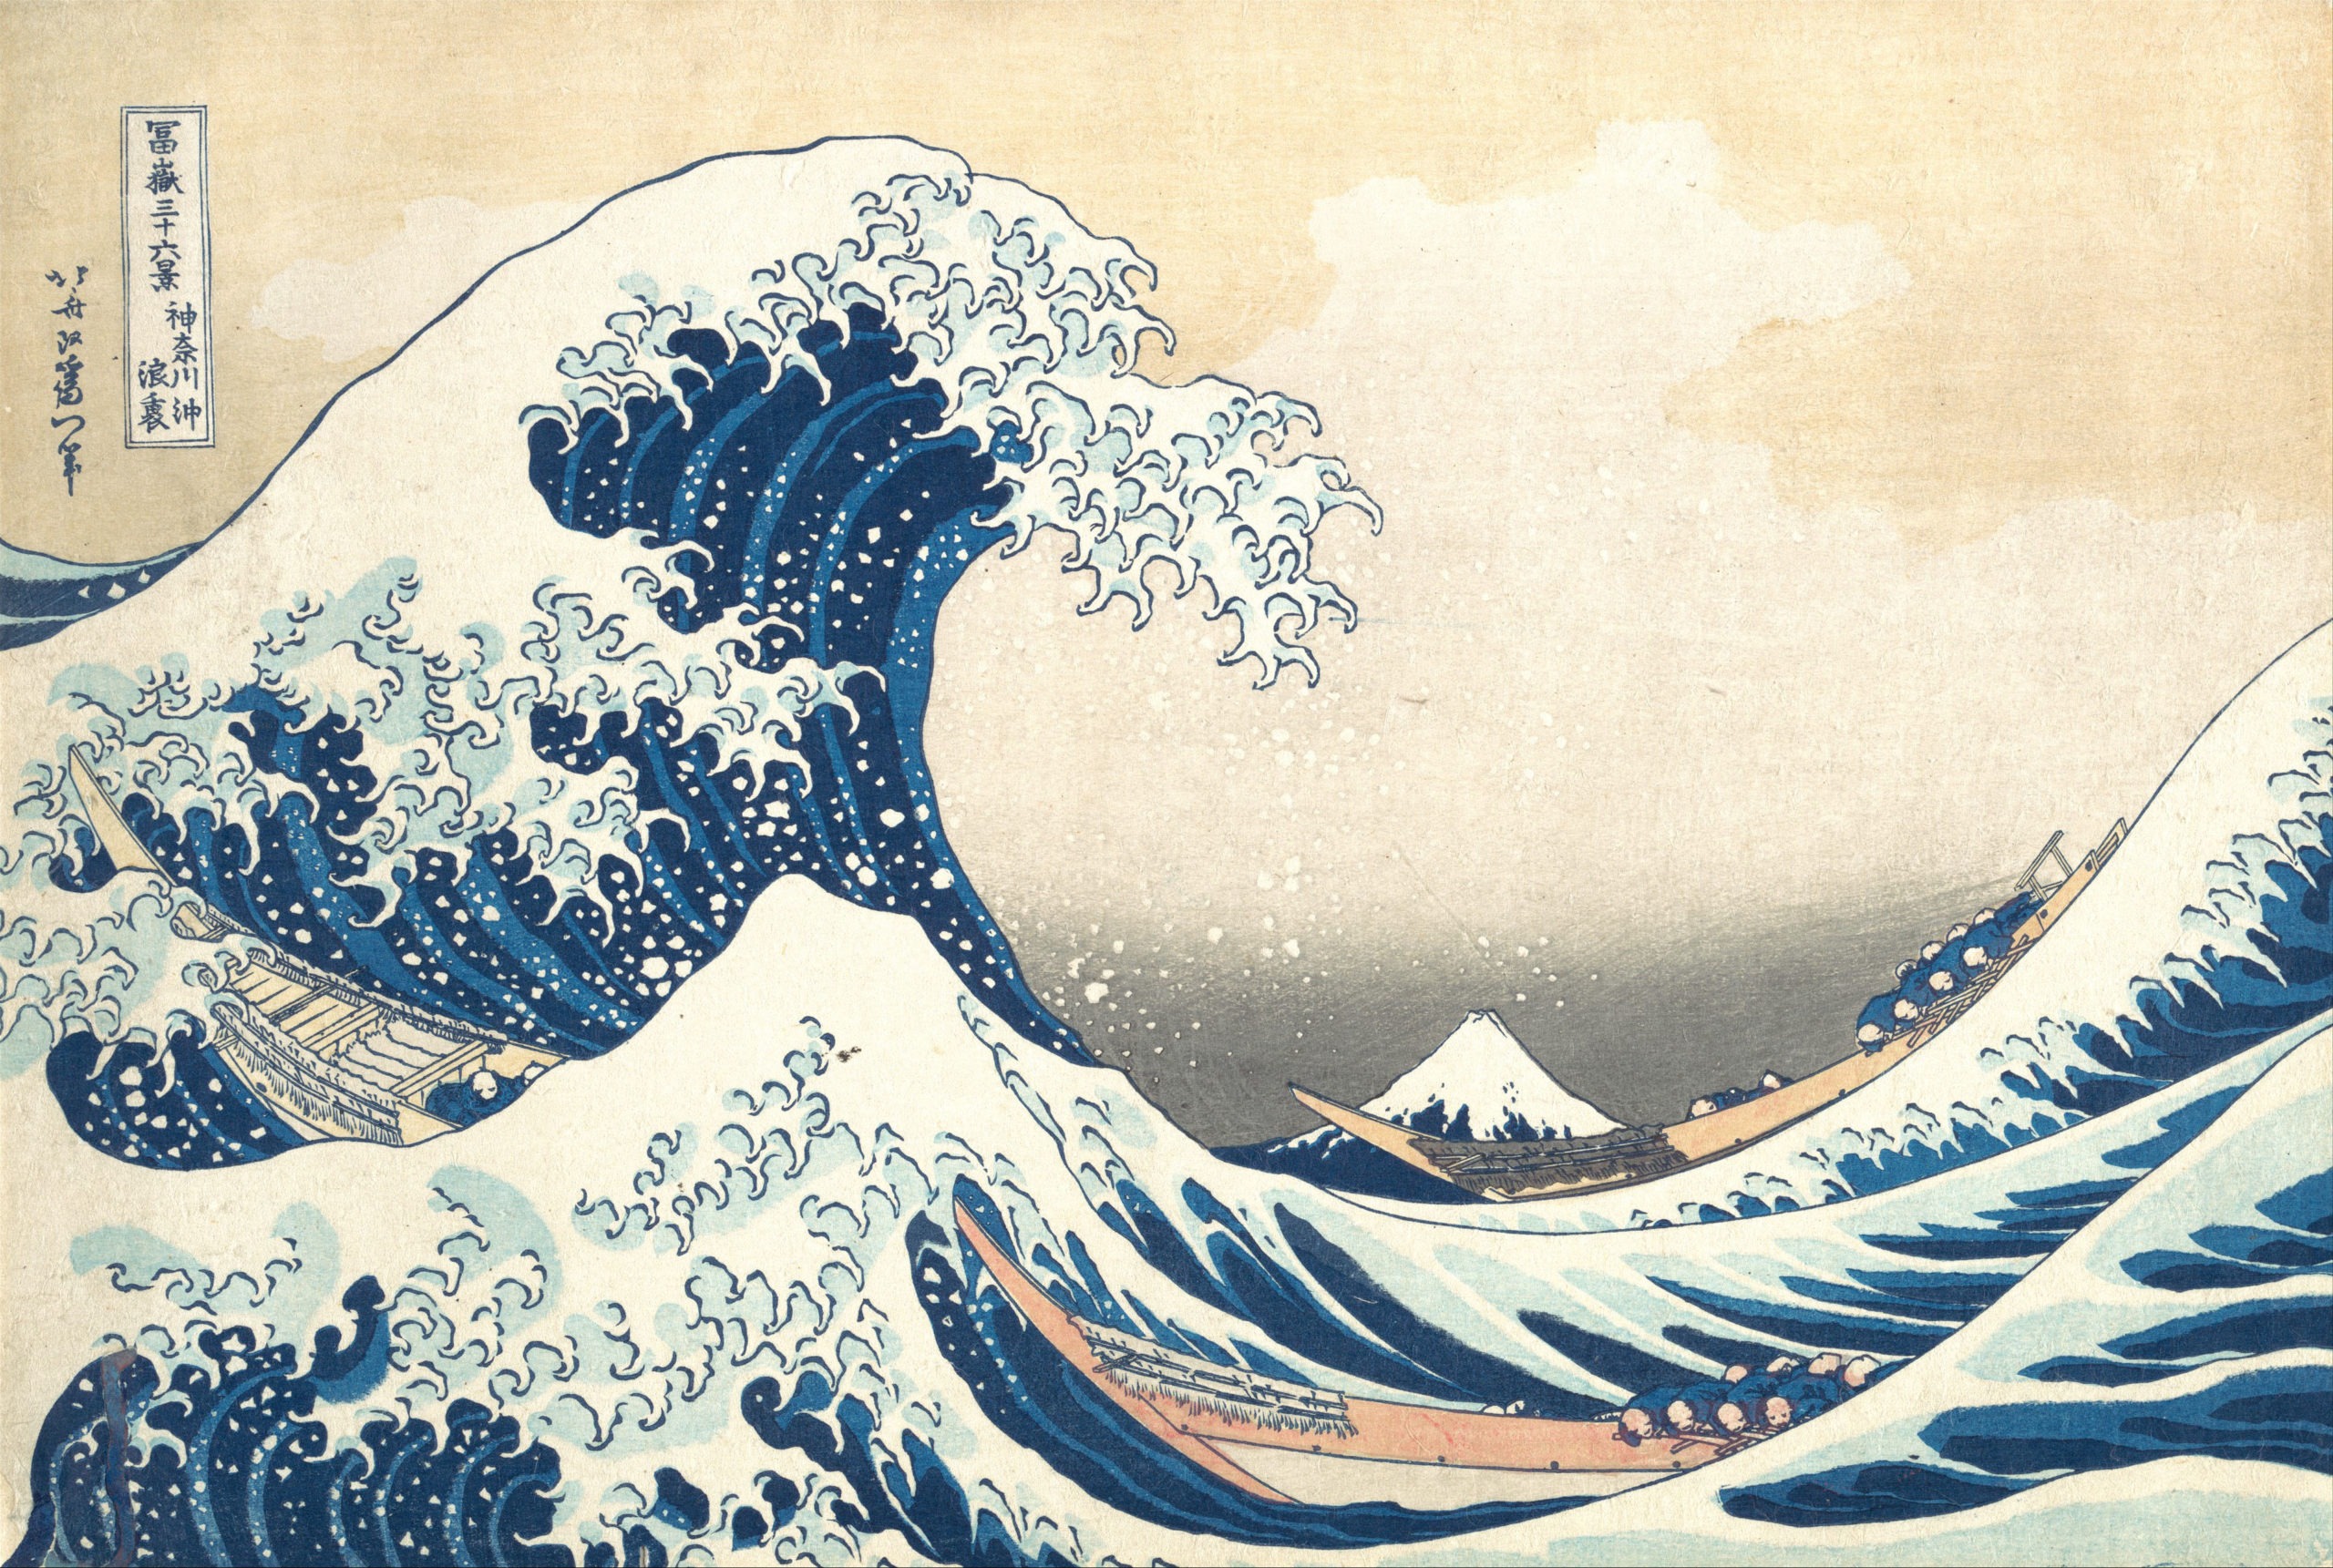 The Great Wave Of Kanagawa